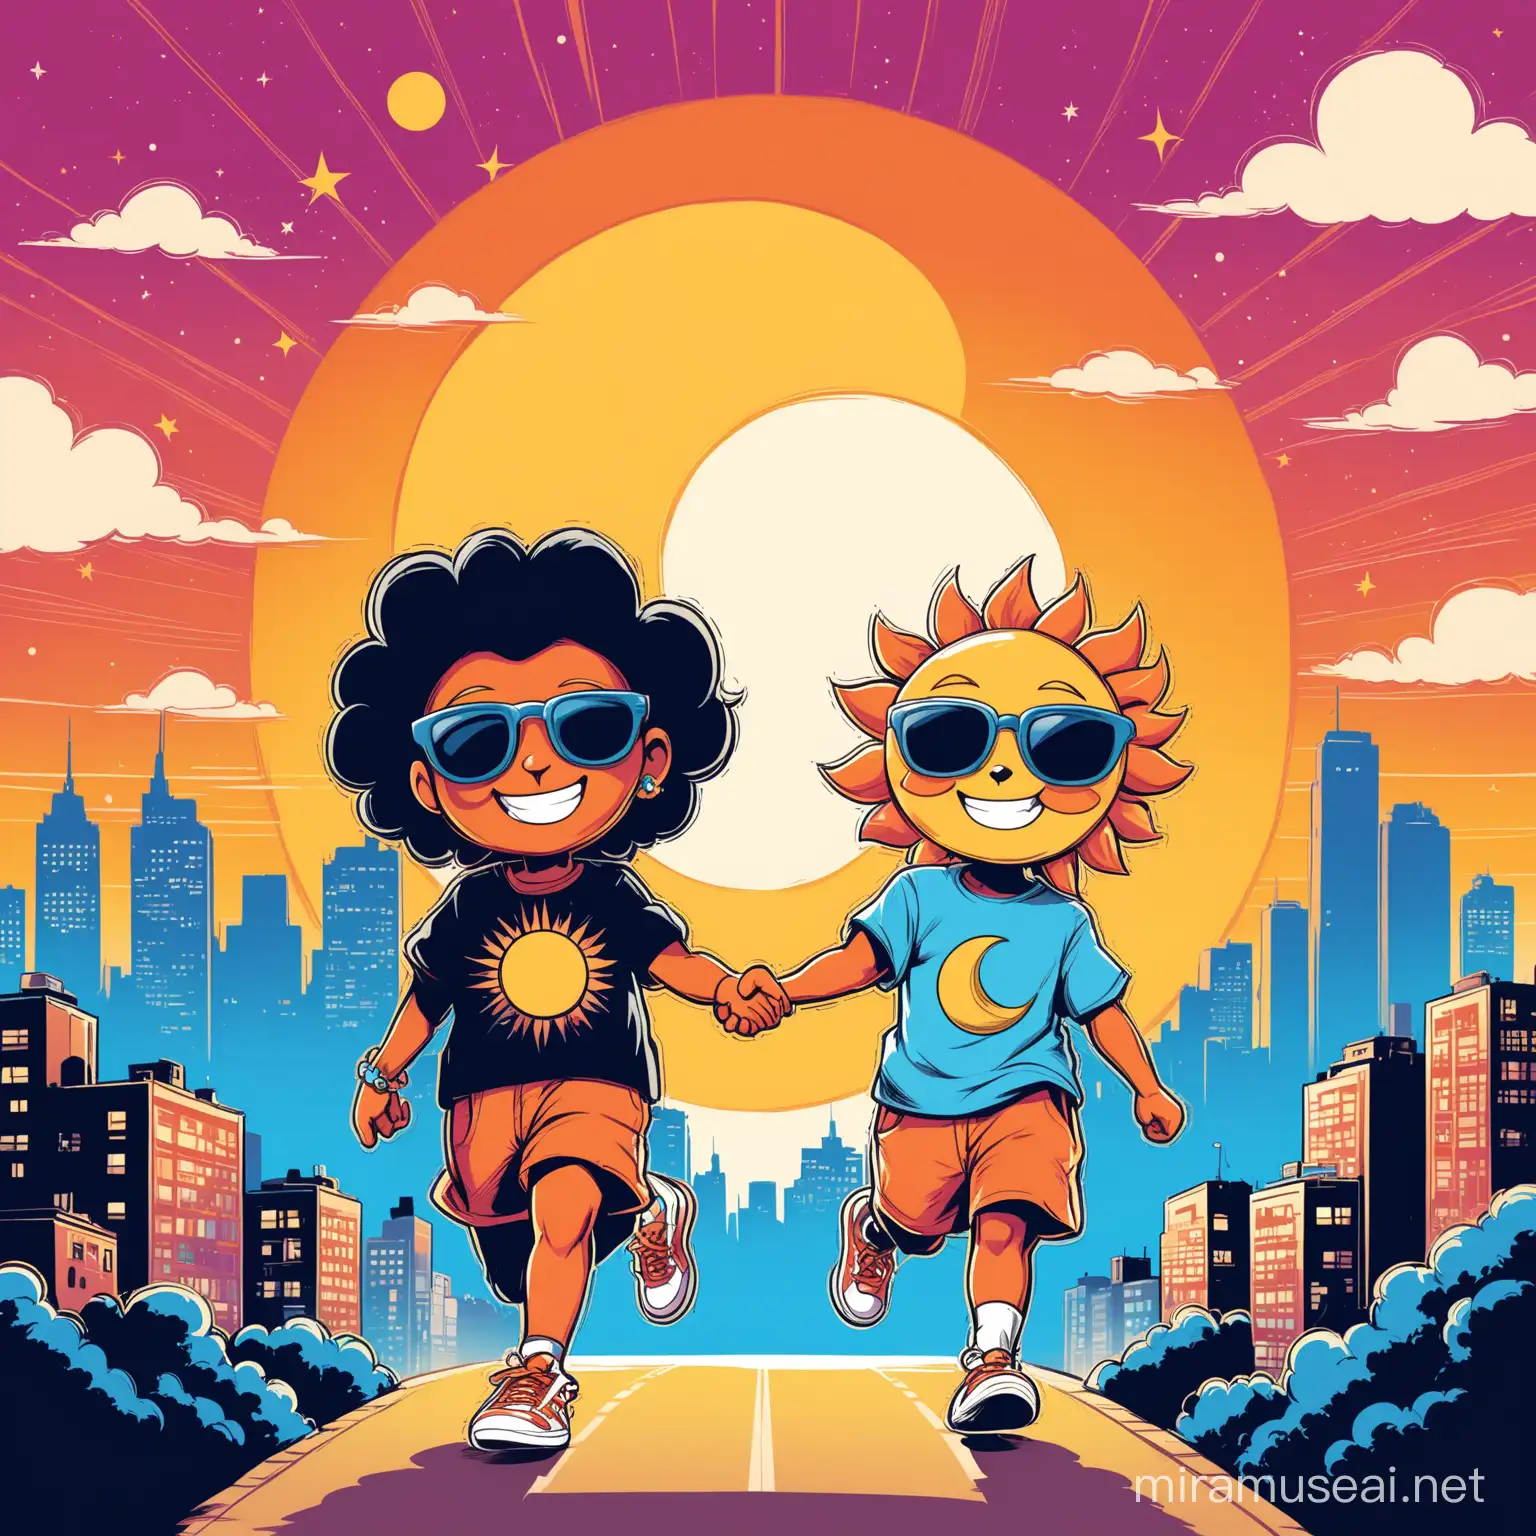 RetroStyle Sun and Moon Mascots Strolling in Urban Skyline